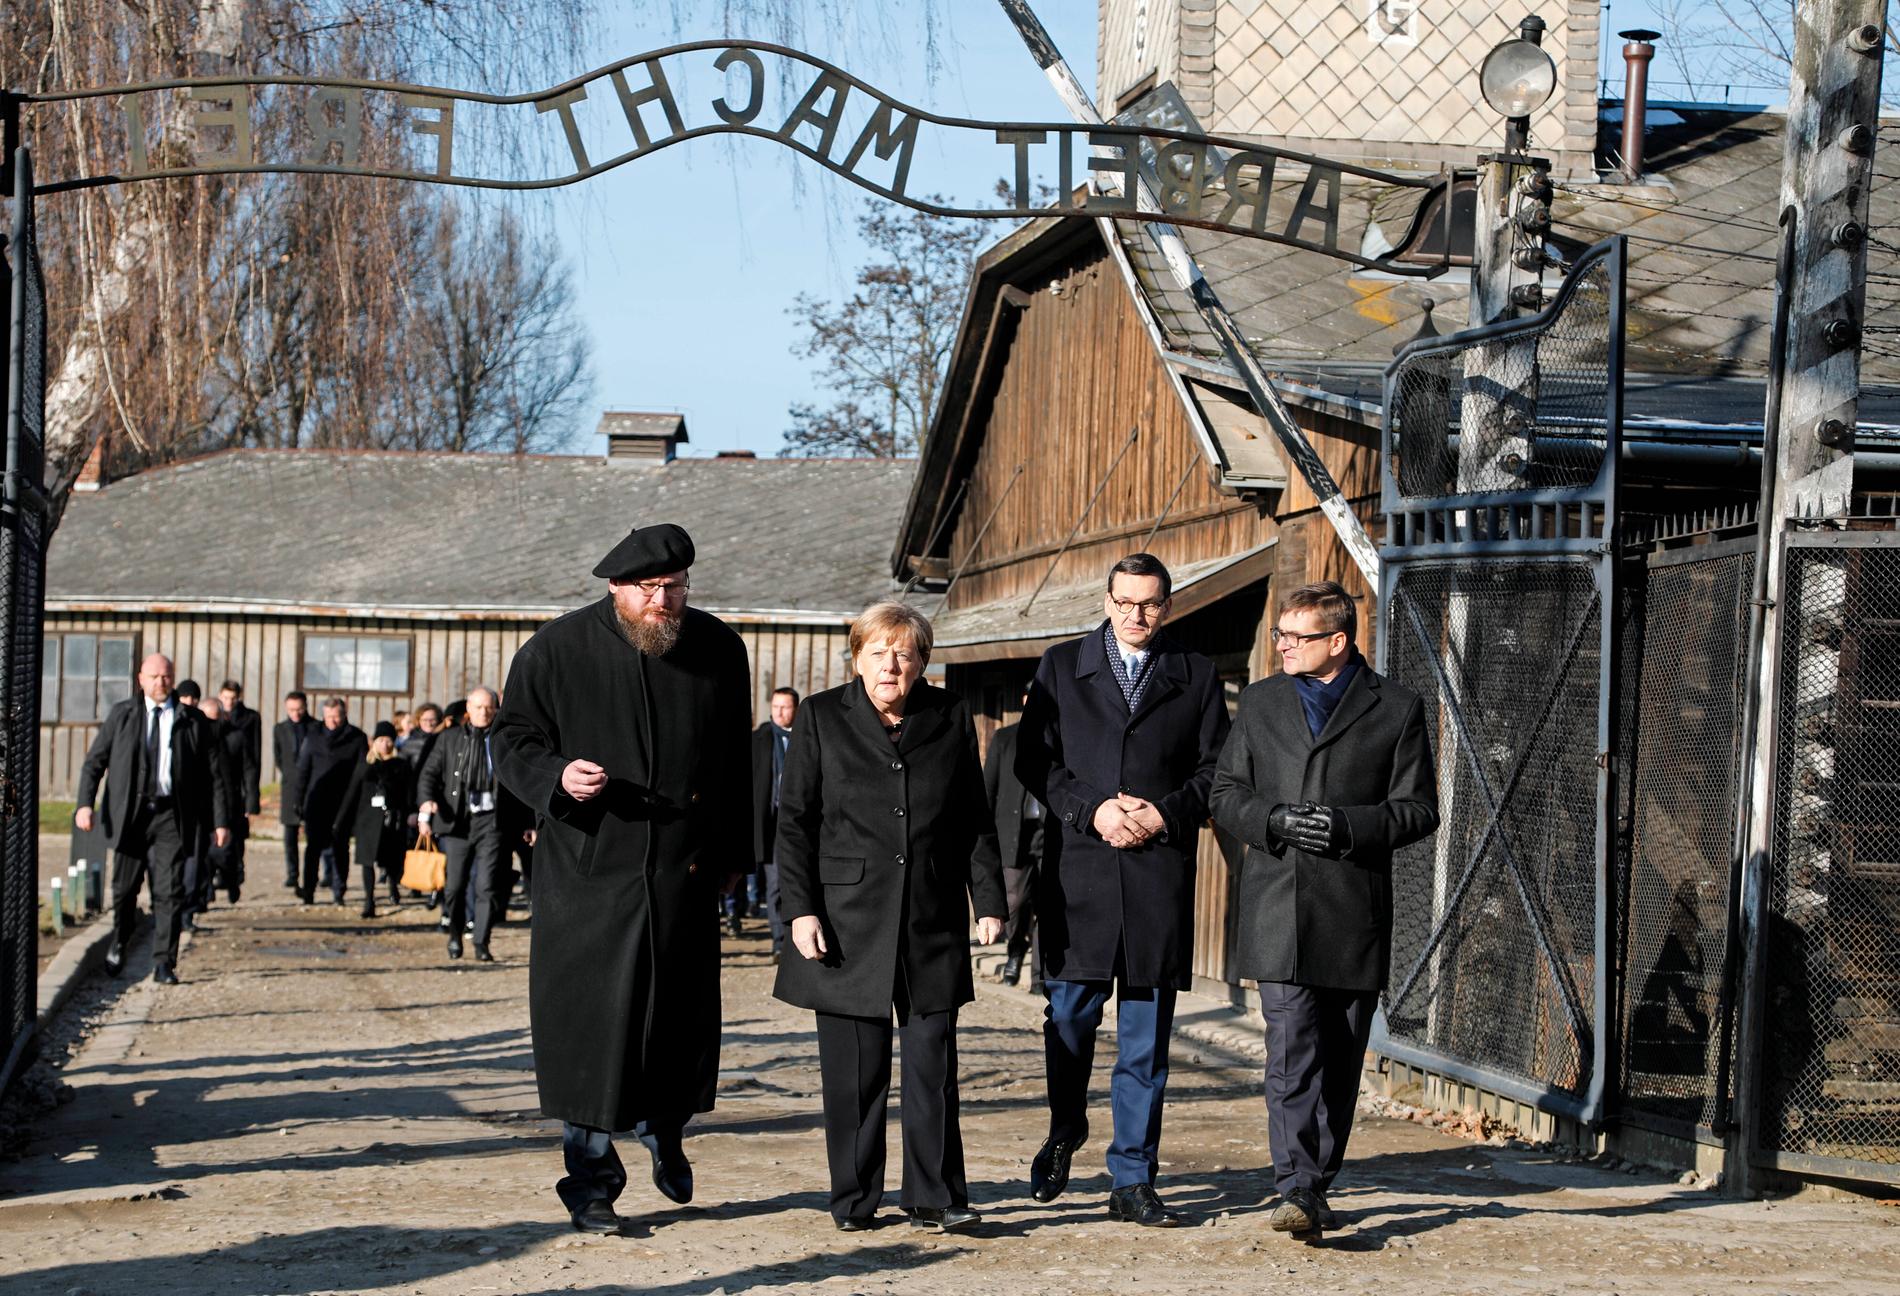 Museichefen Piotr Cywinski, Tysklands förbundskansler Angela Merkel, Polens premiärminister Mateusz Morawiecki och vice museifchef Andrzej Kacorzyk besöker koncentrationslägret Auschwitz-Birkenau i Polen.